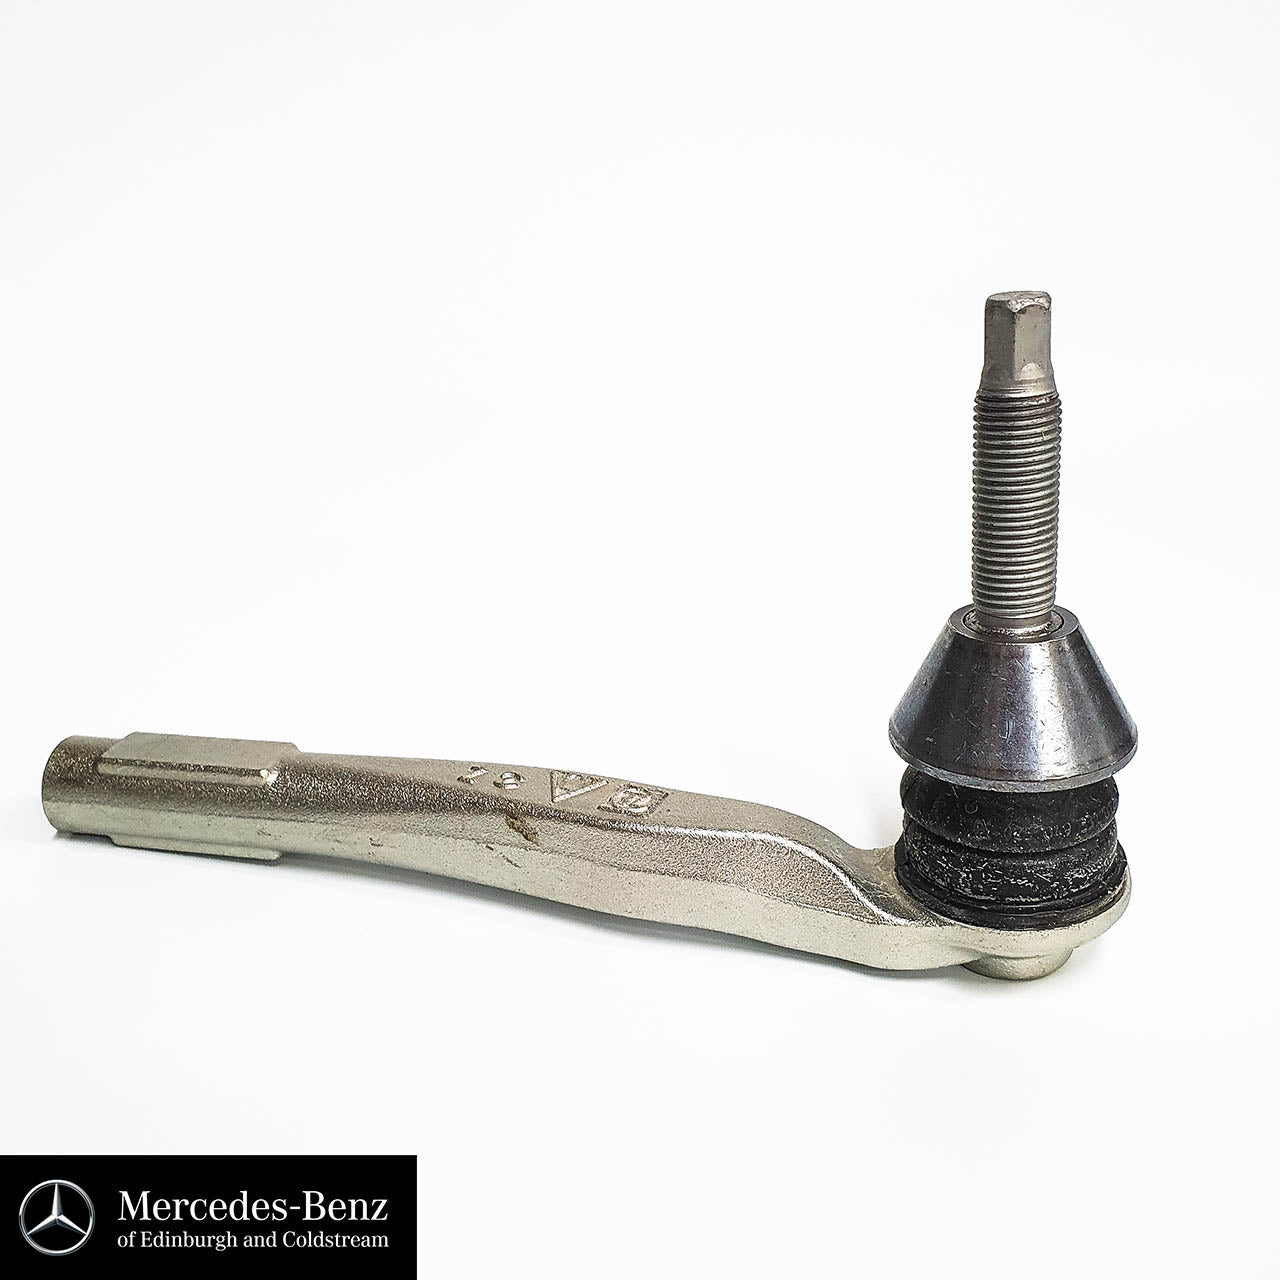 Genuine Mercedes-Benz tie rod end for C Class, E Class, CLS